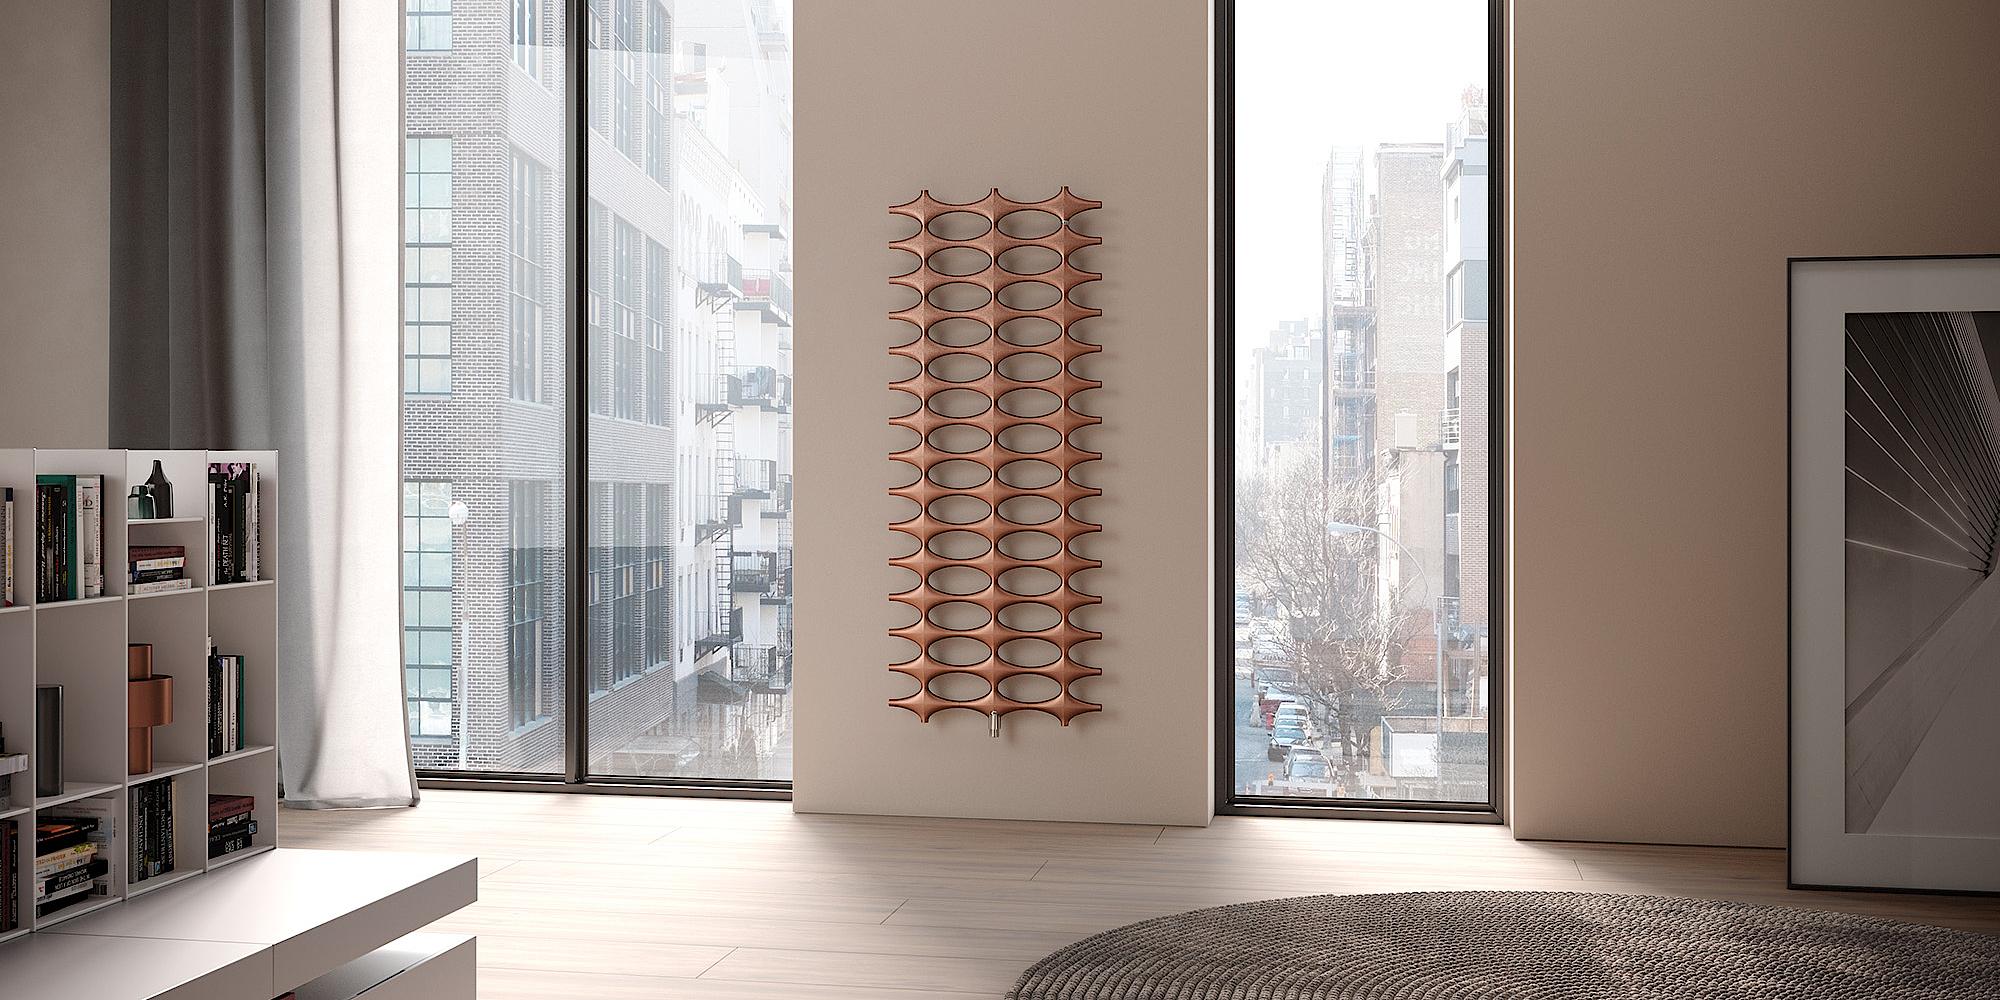 Kermi Ideos design and bathroom radiators – a unique and distinctive radiator design based on a modular approach.